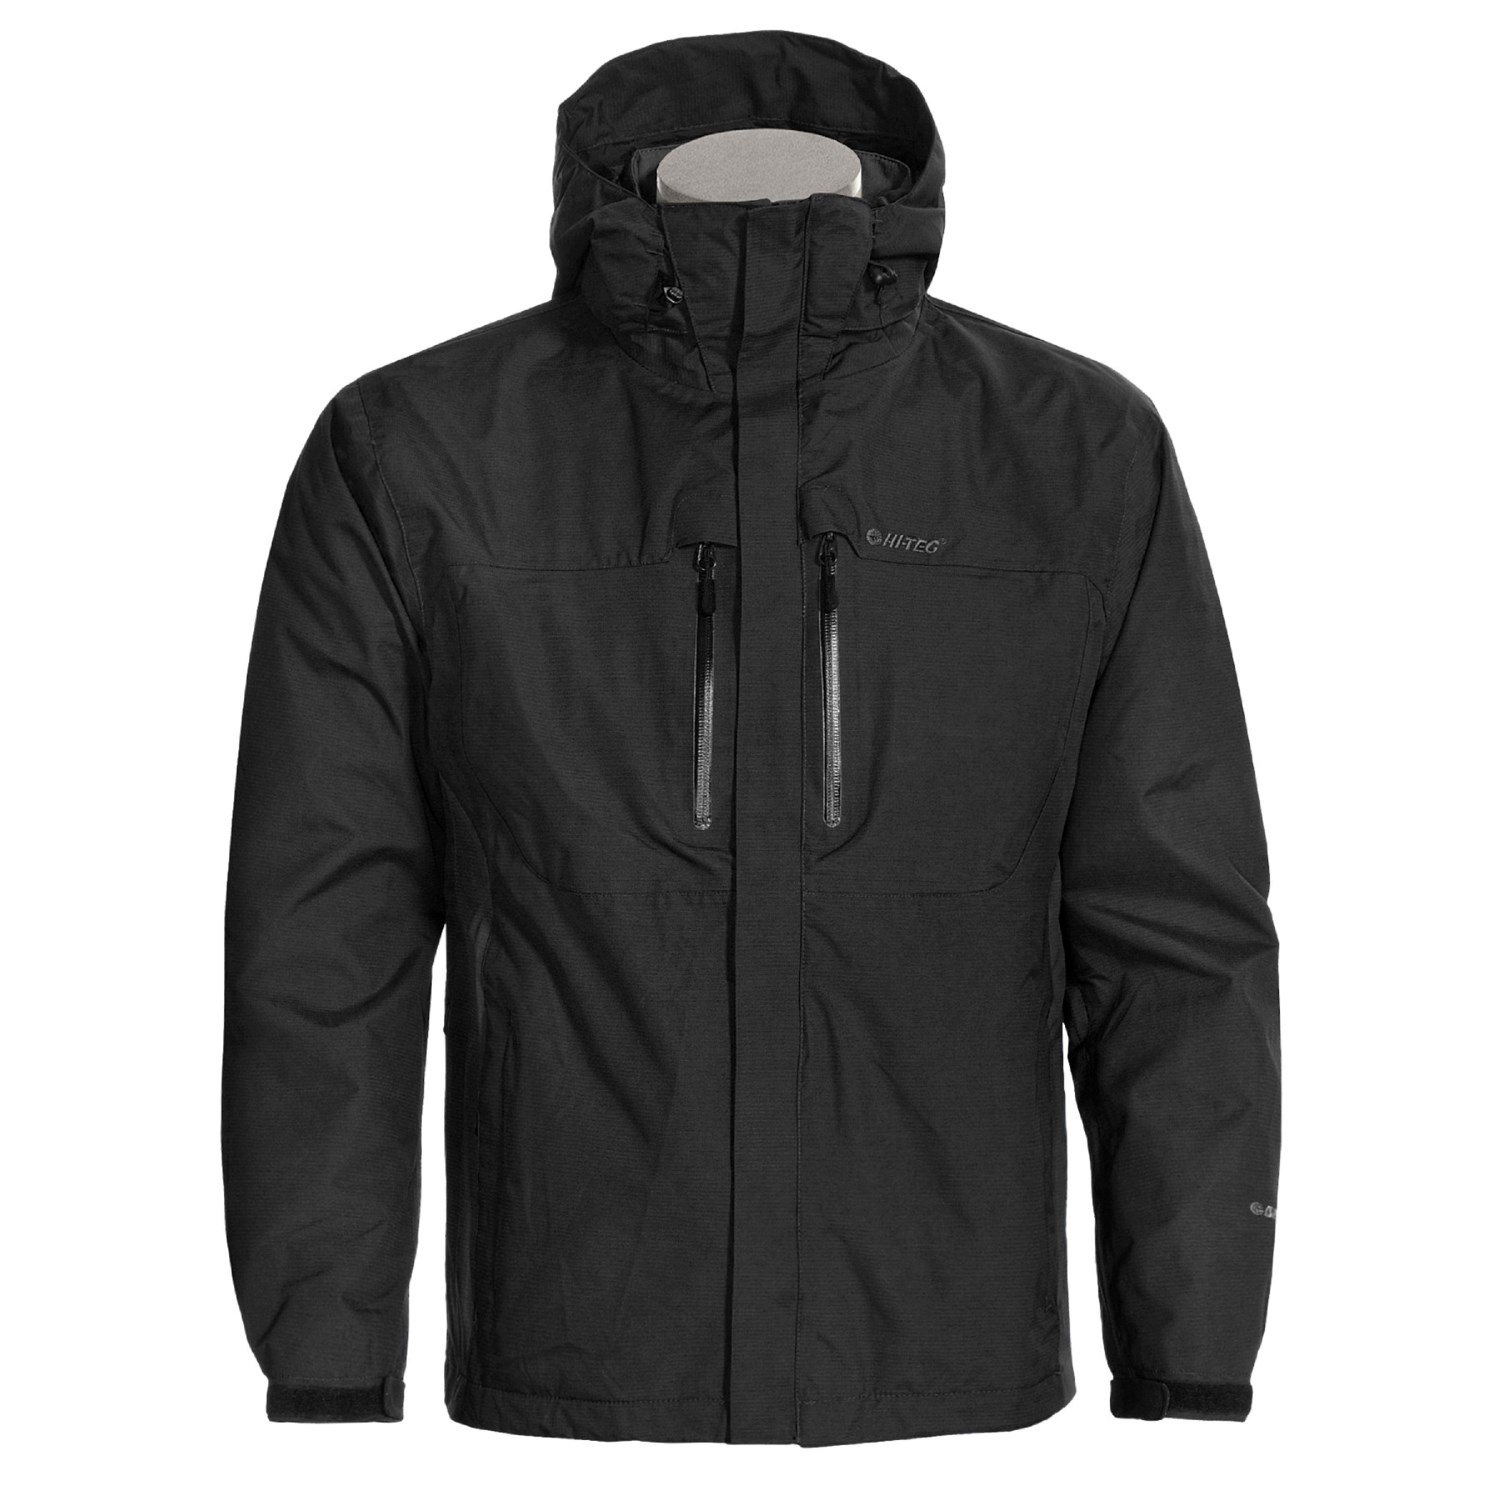 Hi-Tec Mystic Mountain Shell Jacket (For Men) 3509T - Save 37%